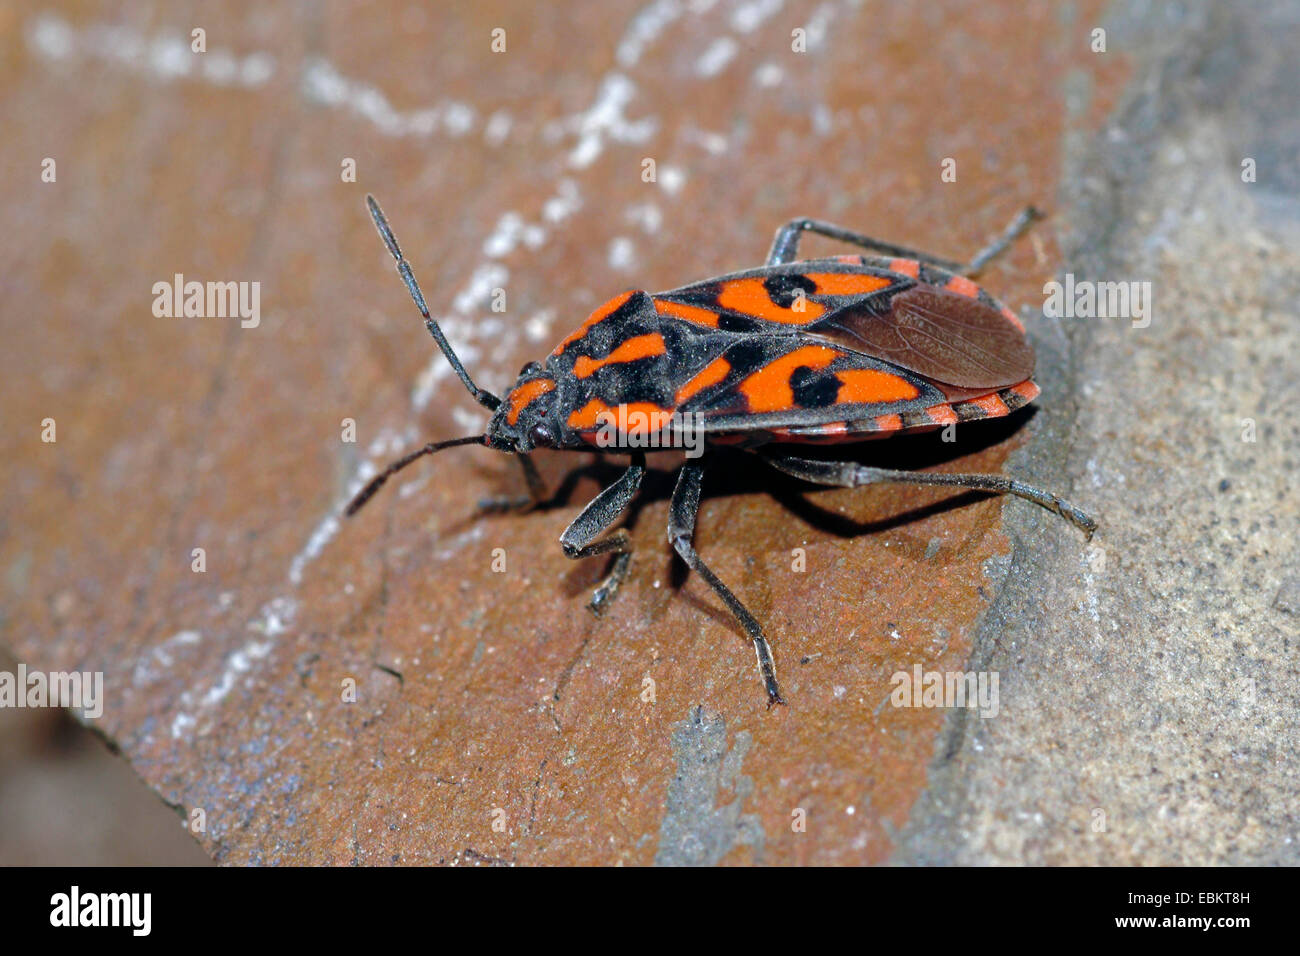 Cretan Soldier Beetle (Lygaeus saxatilis), sitting on the ground, Germany Stock Photo